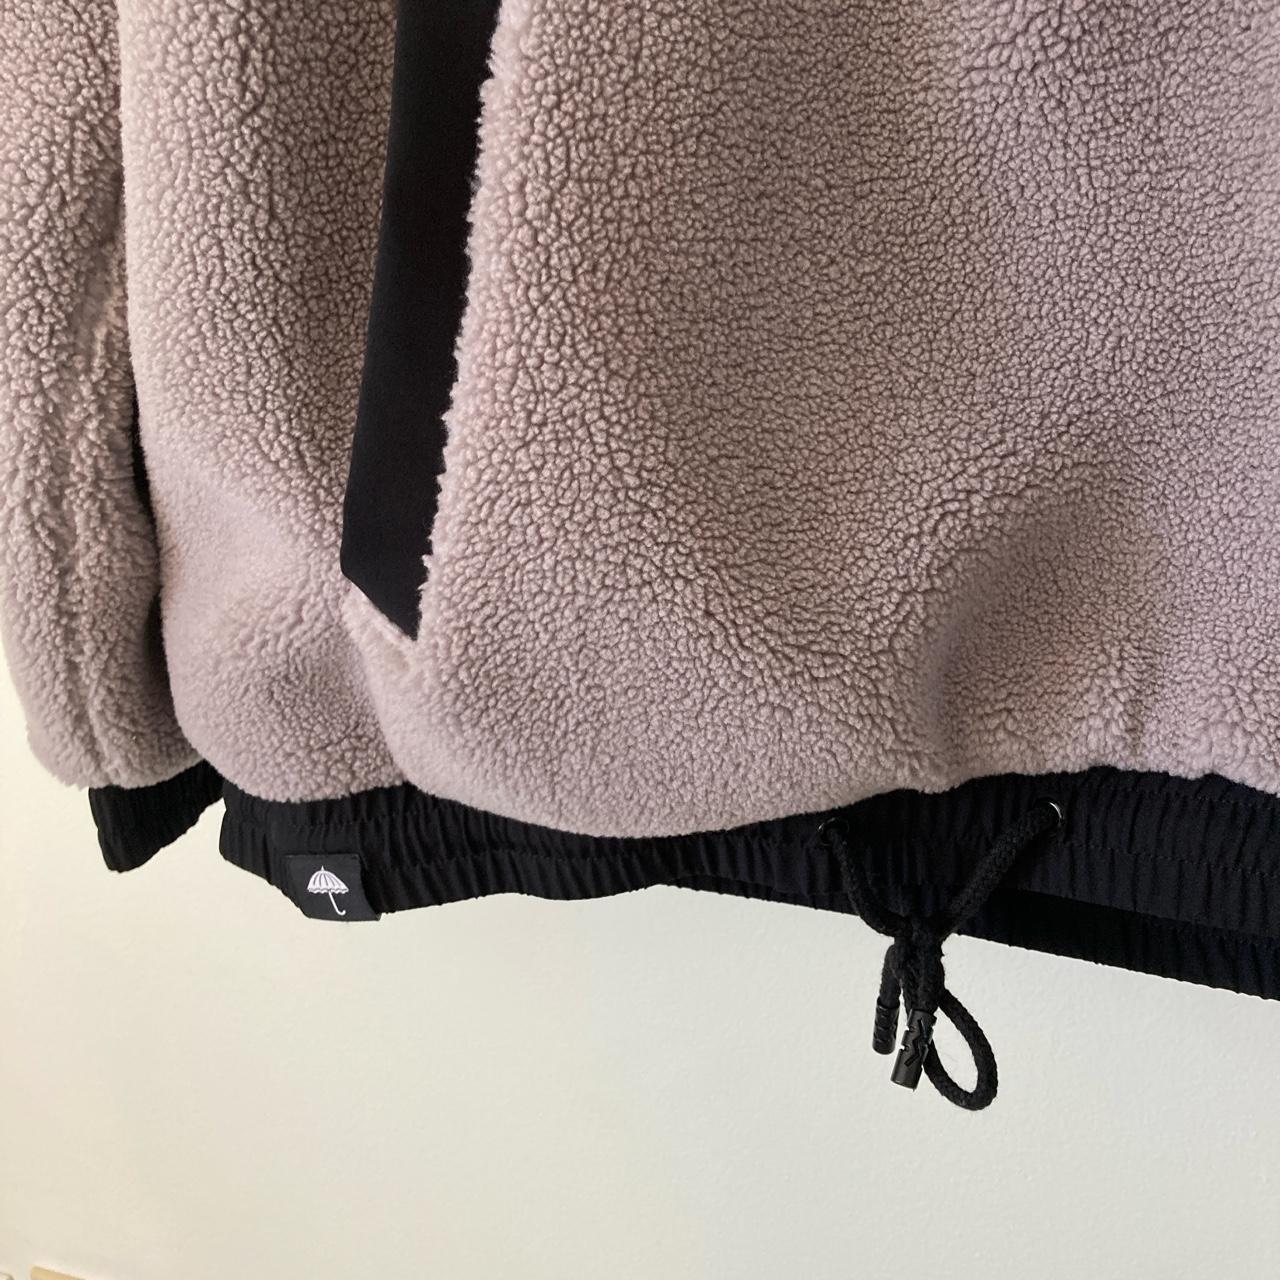 Product Image 3 - Helas - Fleece pullover.
Size -